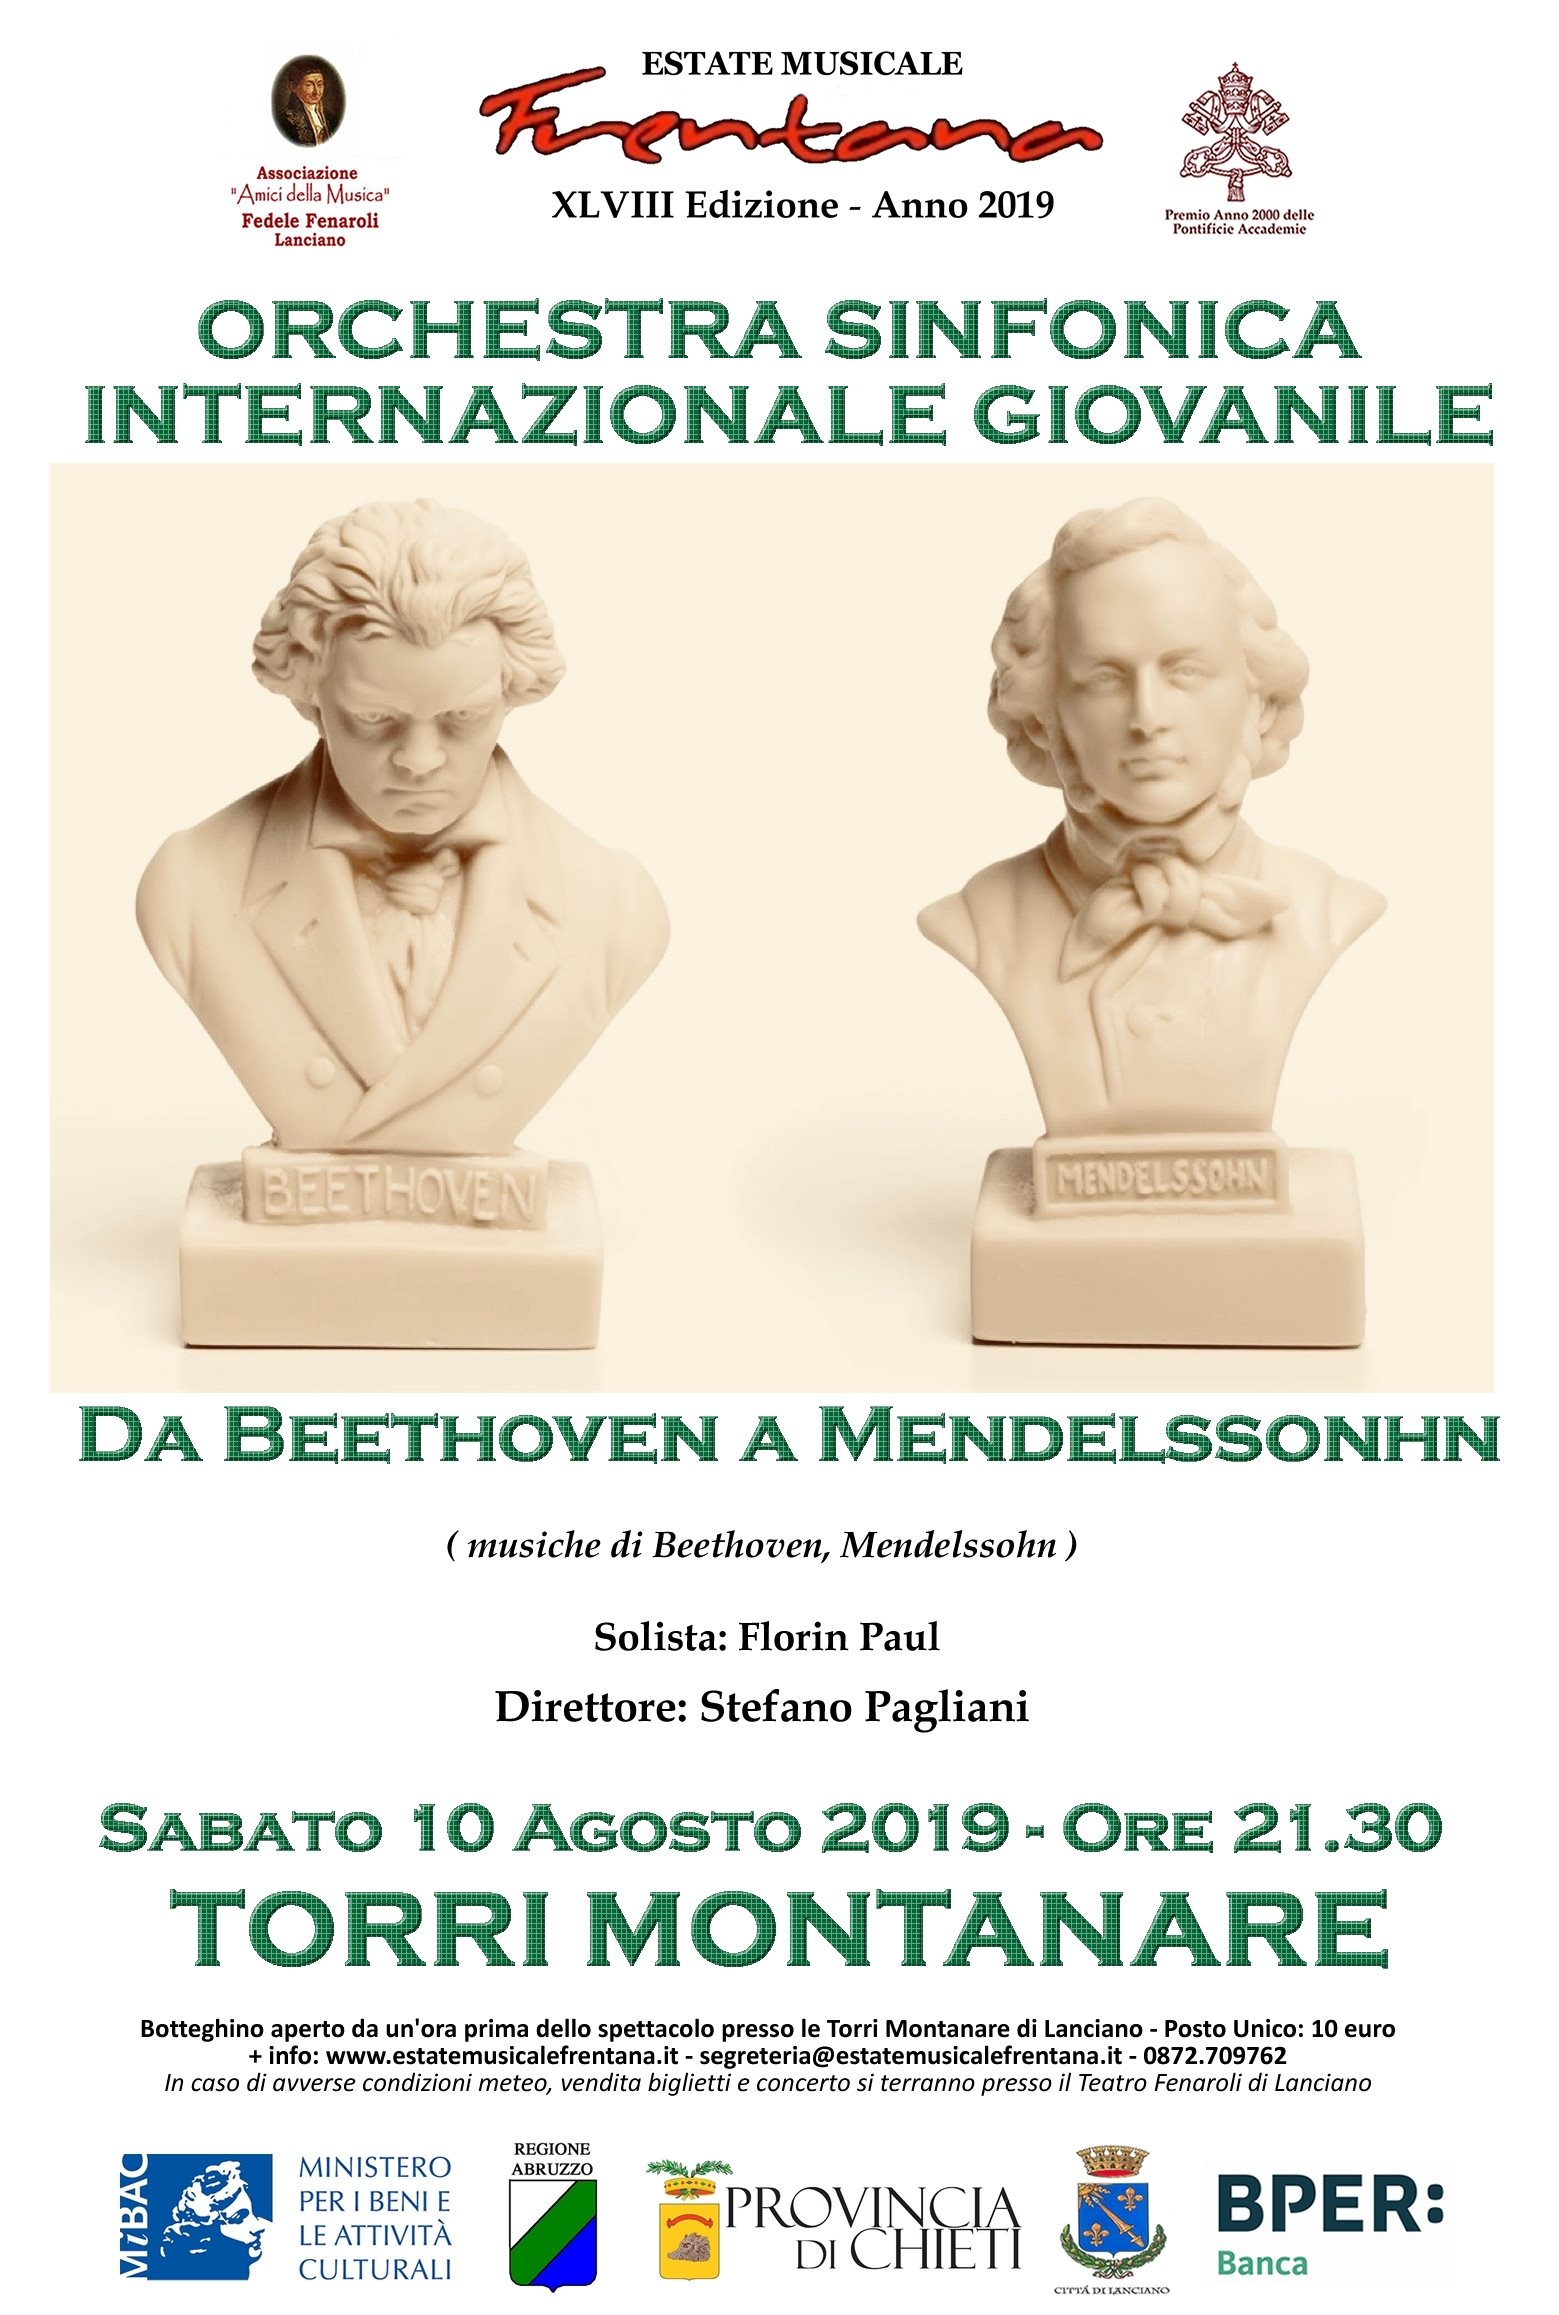 Da Beethoven a Mendelssohn - Orchestra Sinfonica Internazionale Giovanile